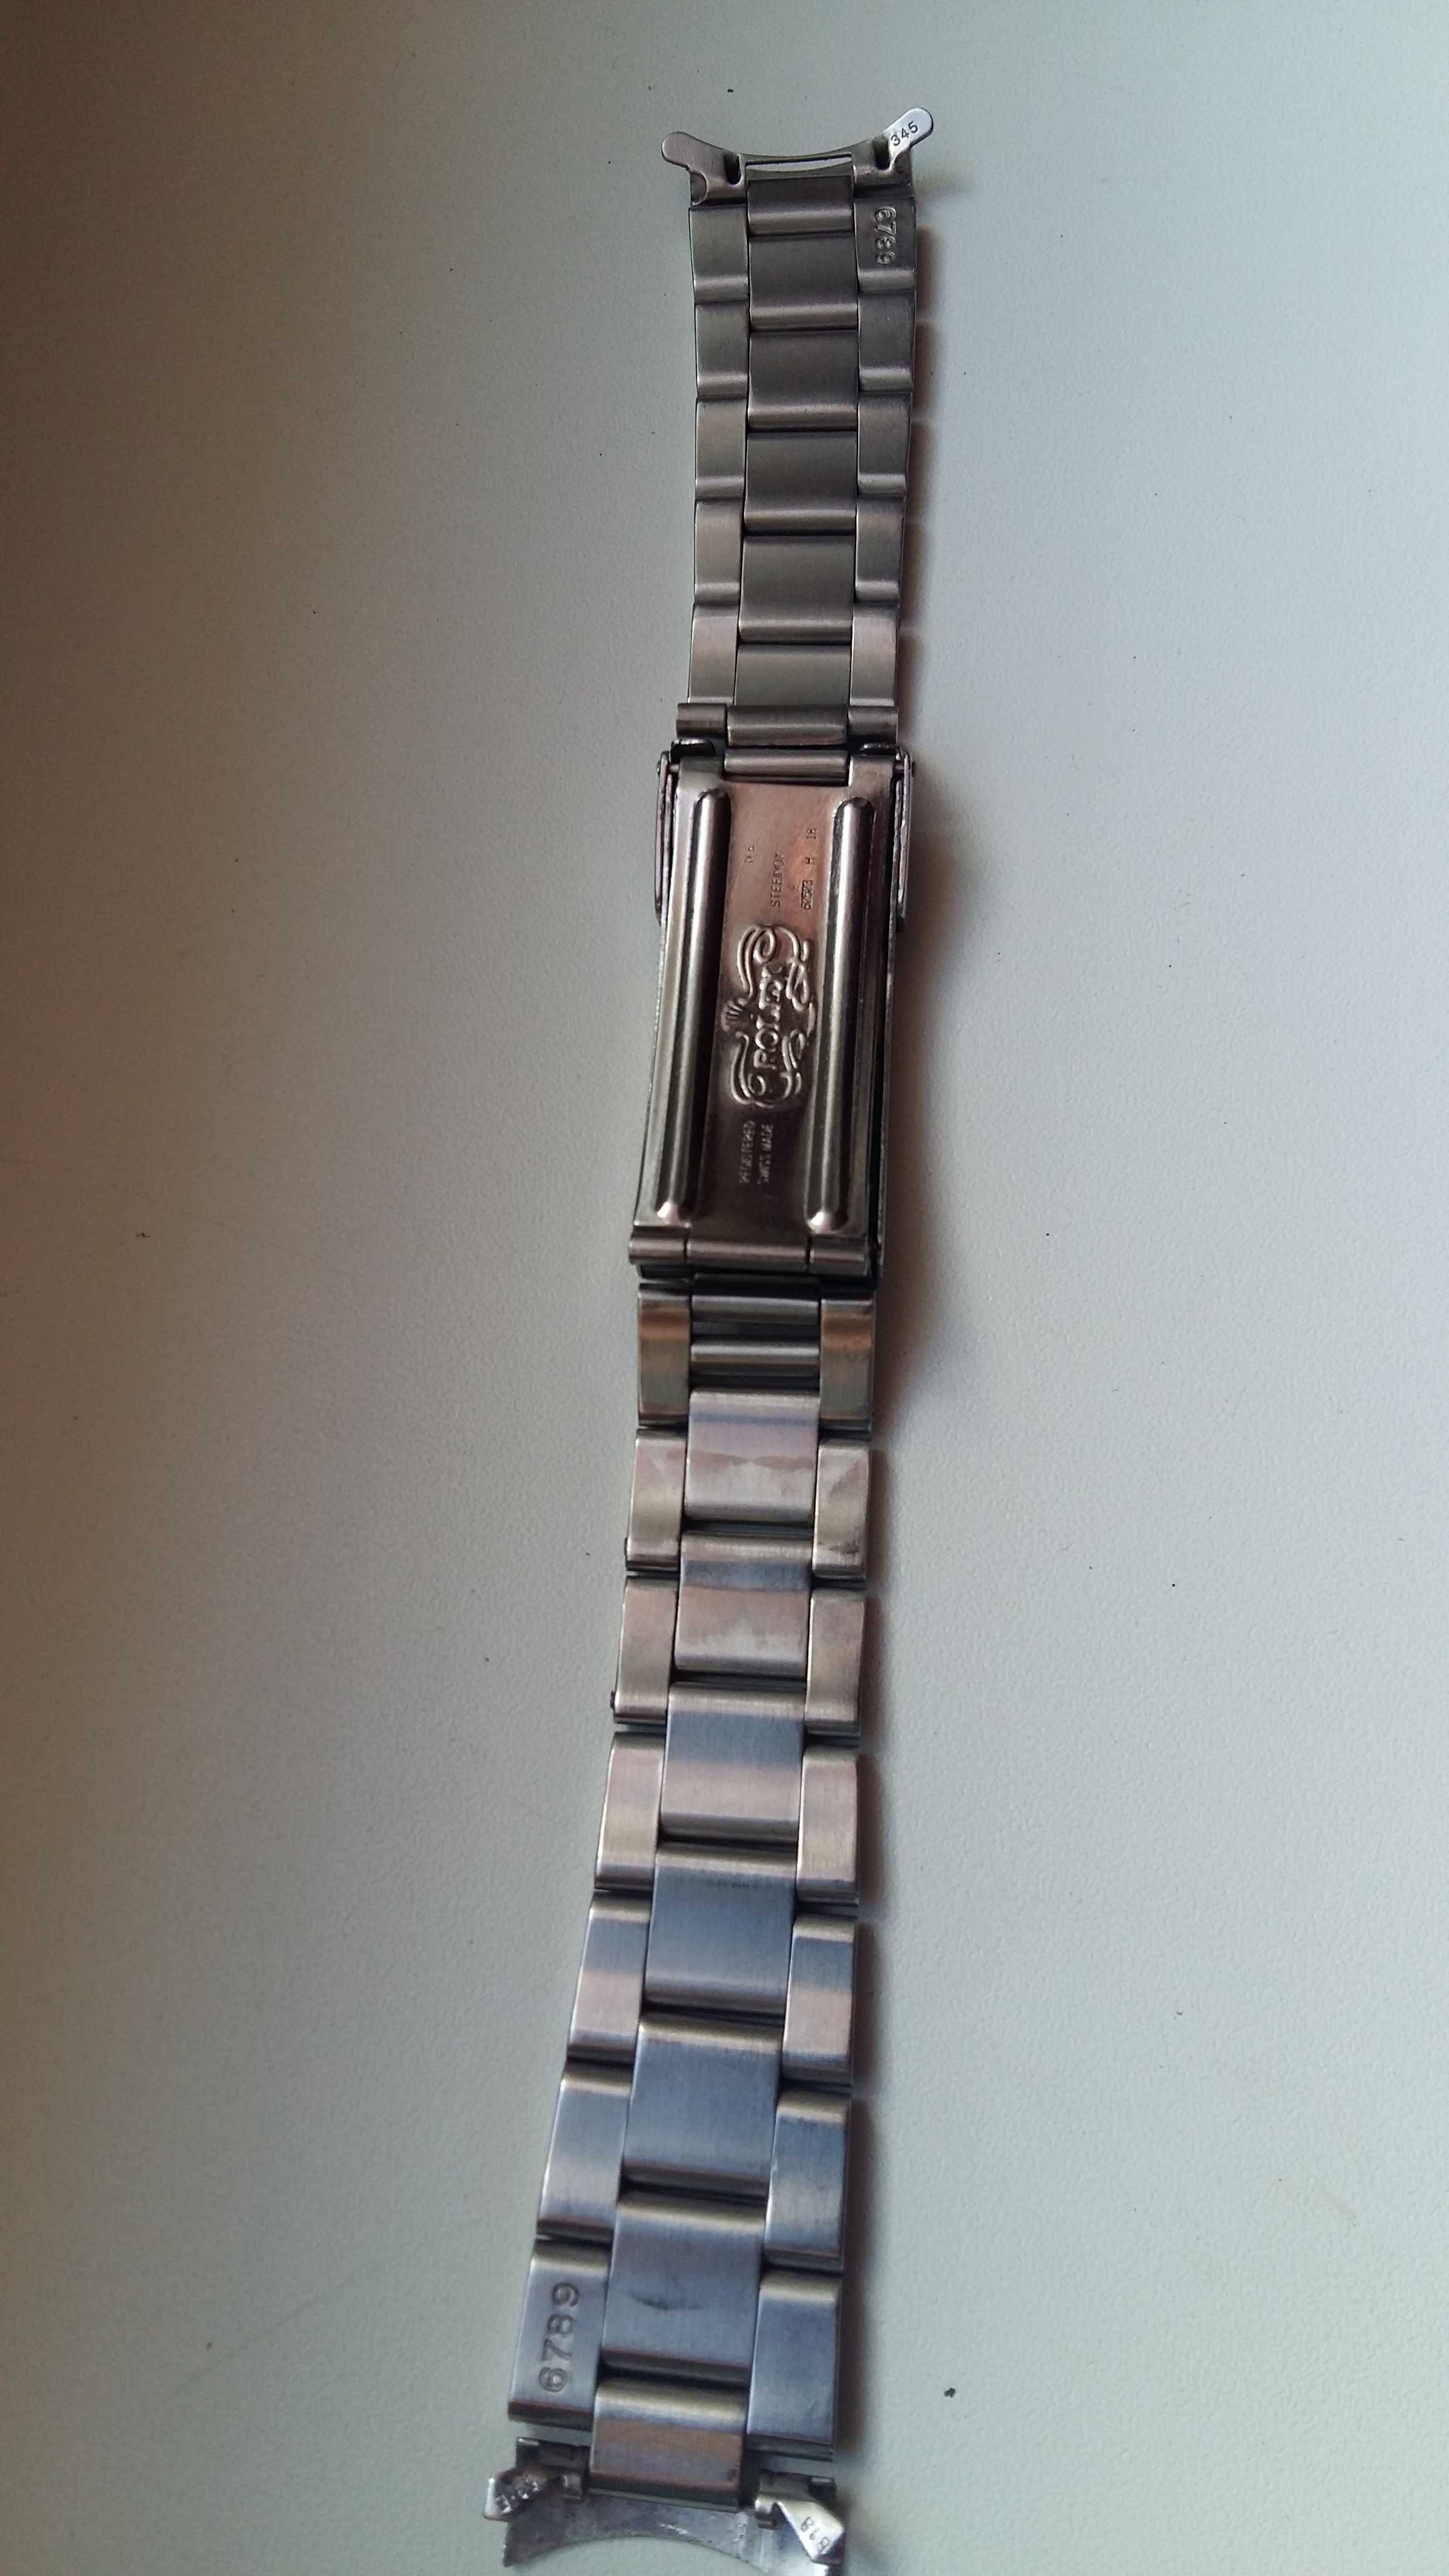 Zegarek-bransoleta do Rolex Oyster-Dwellr nie srebro.